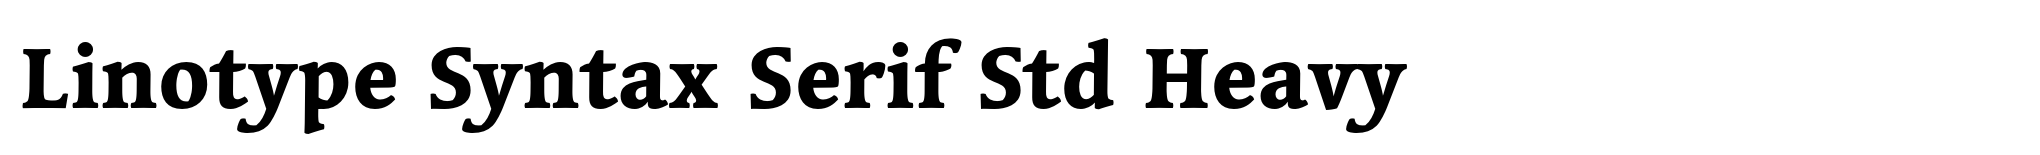 Linotype Syntax Serif Std Heavy image